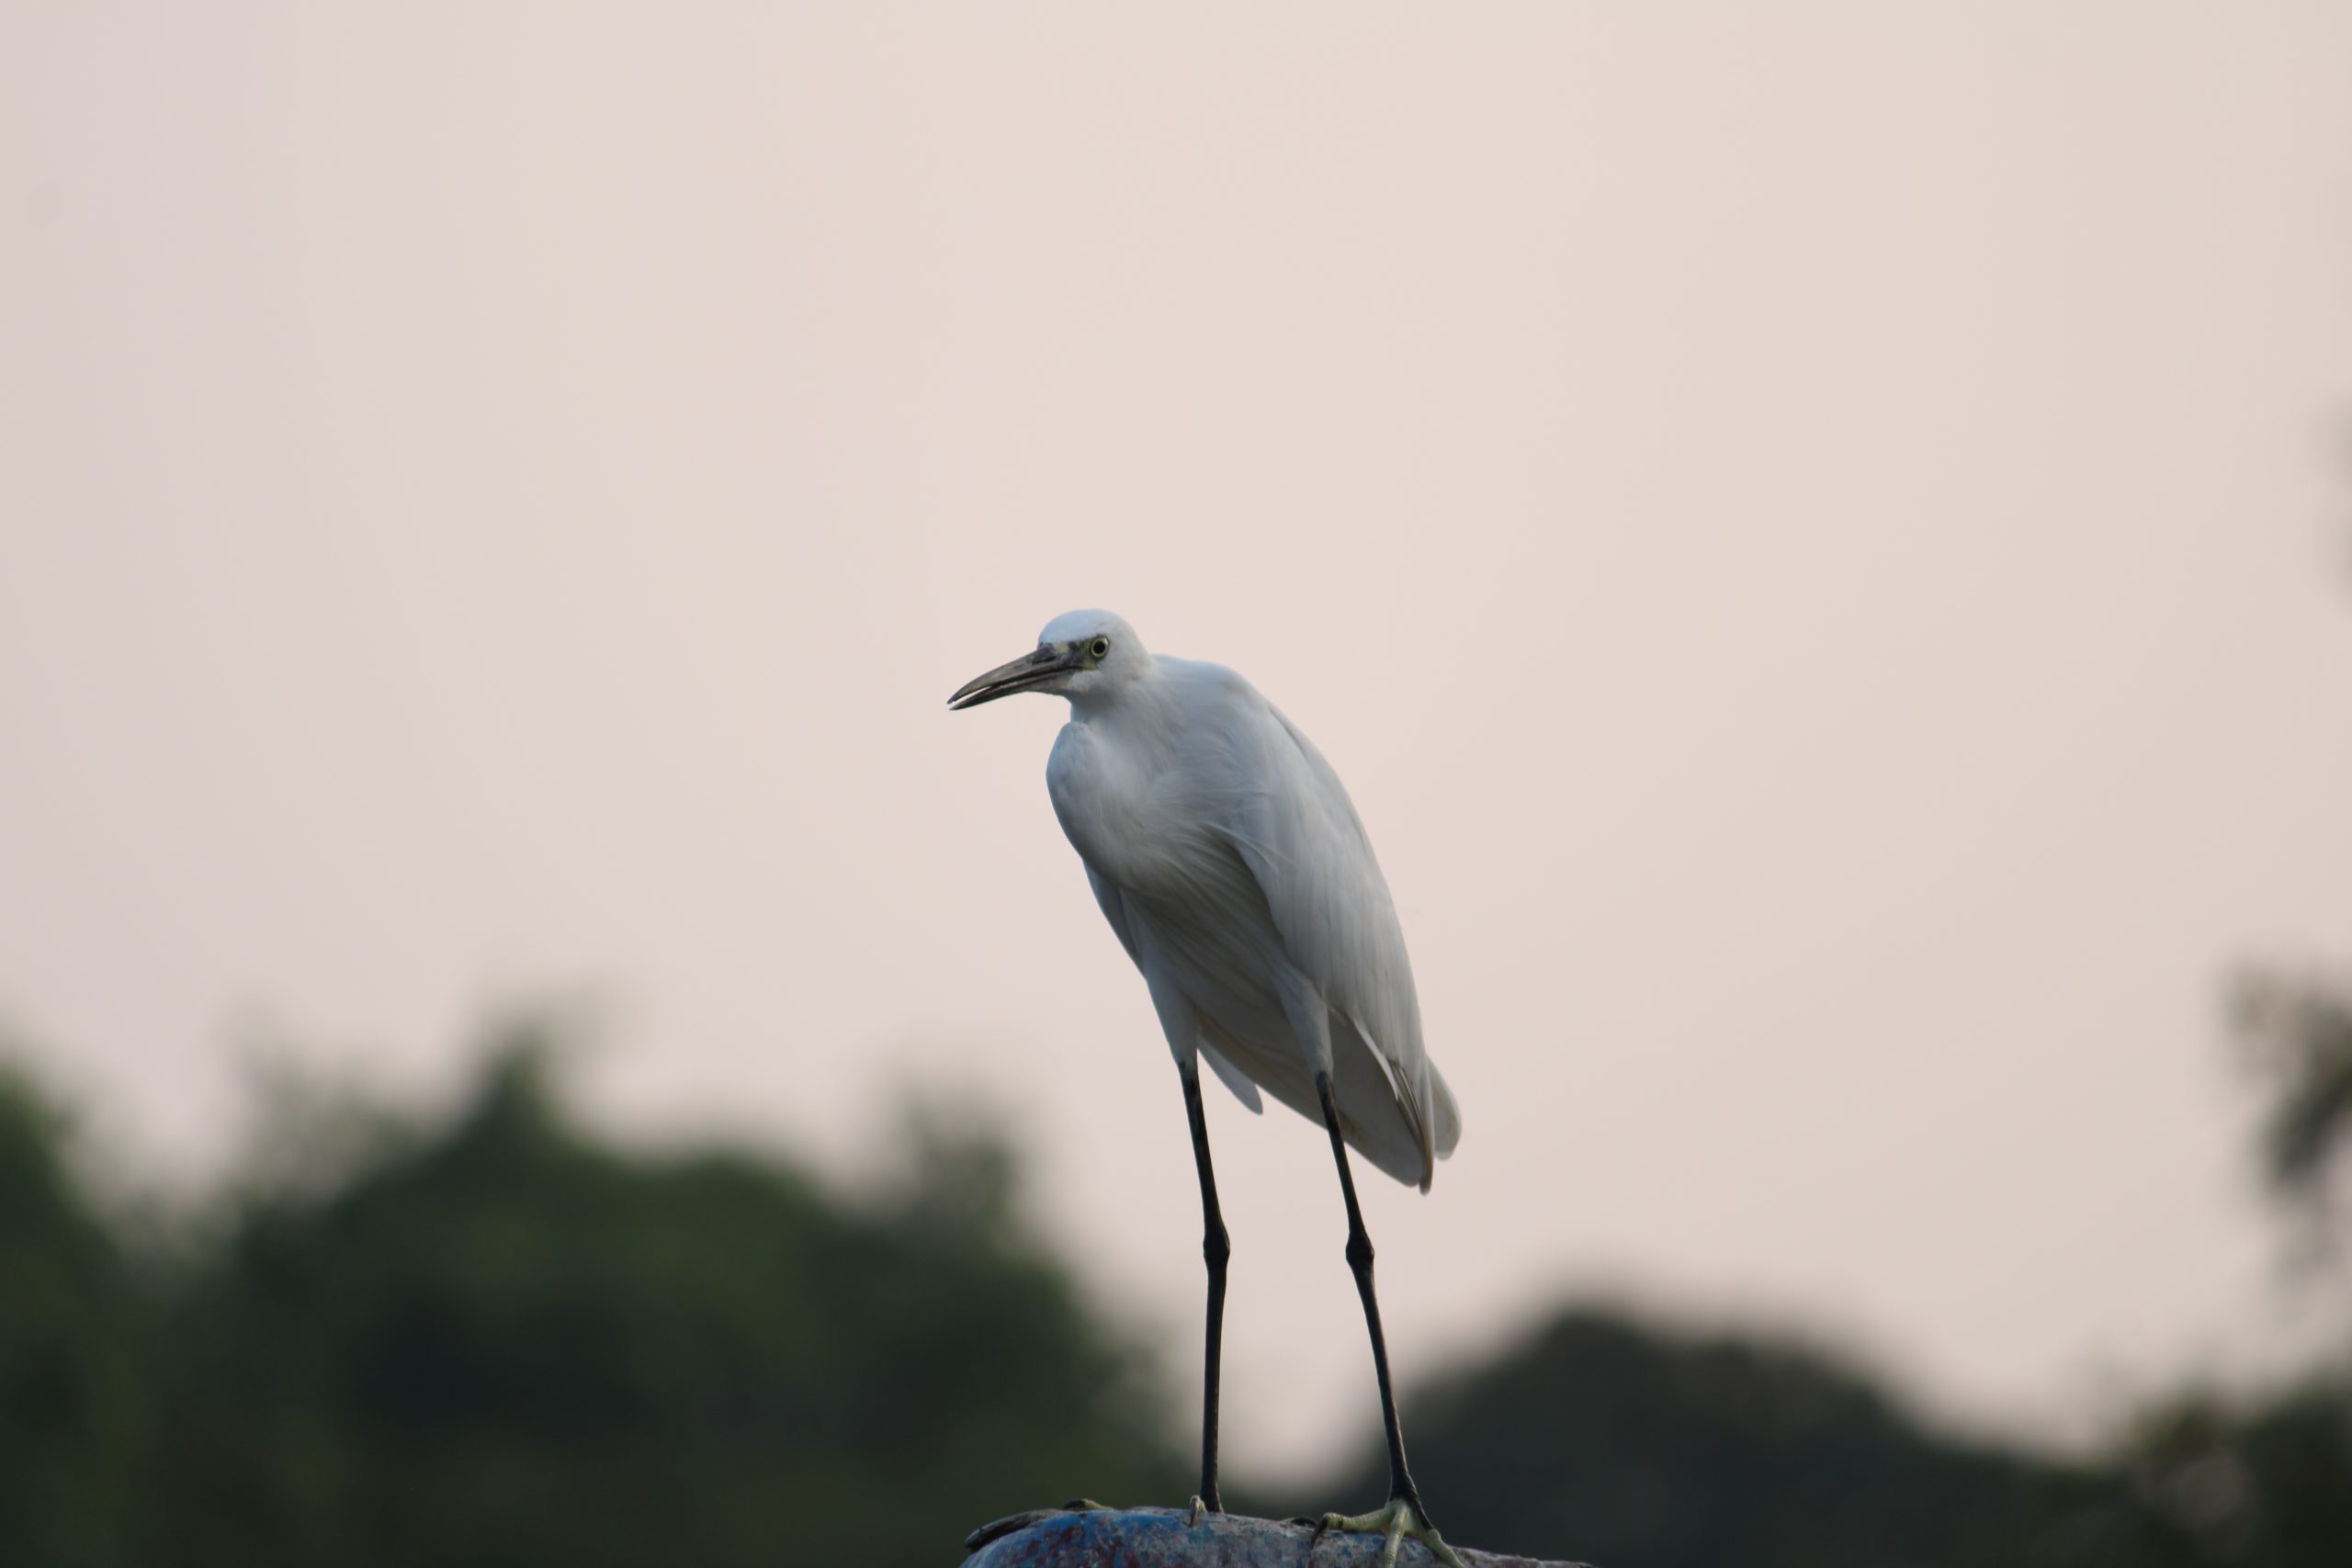 A crane bird sitting on the rock